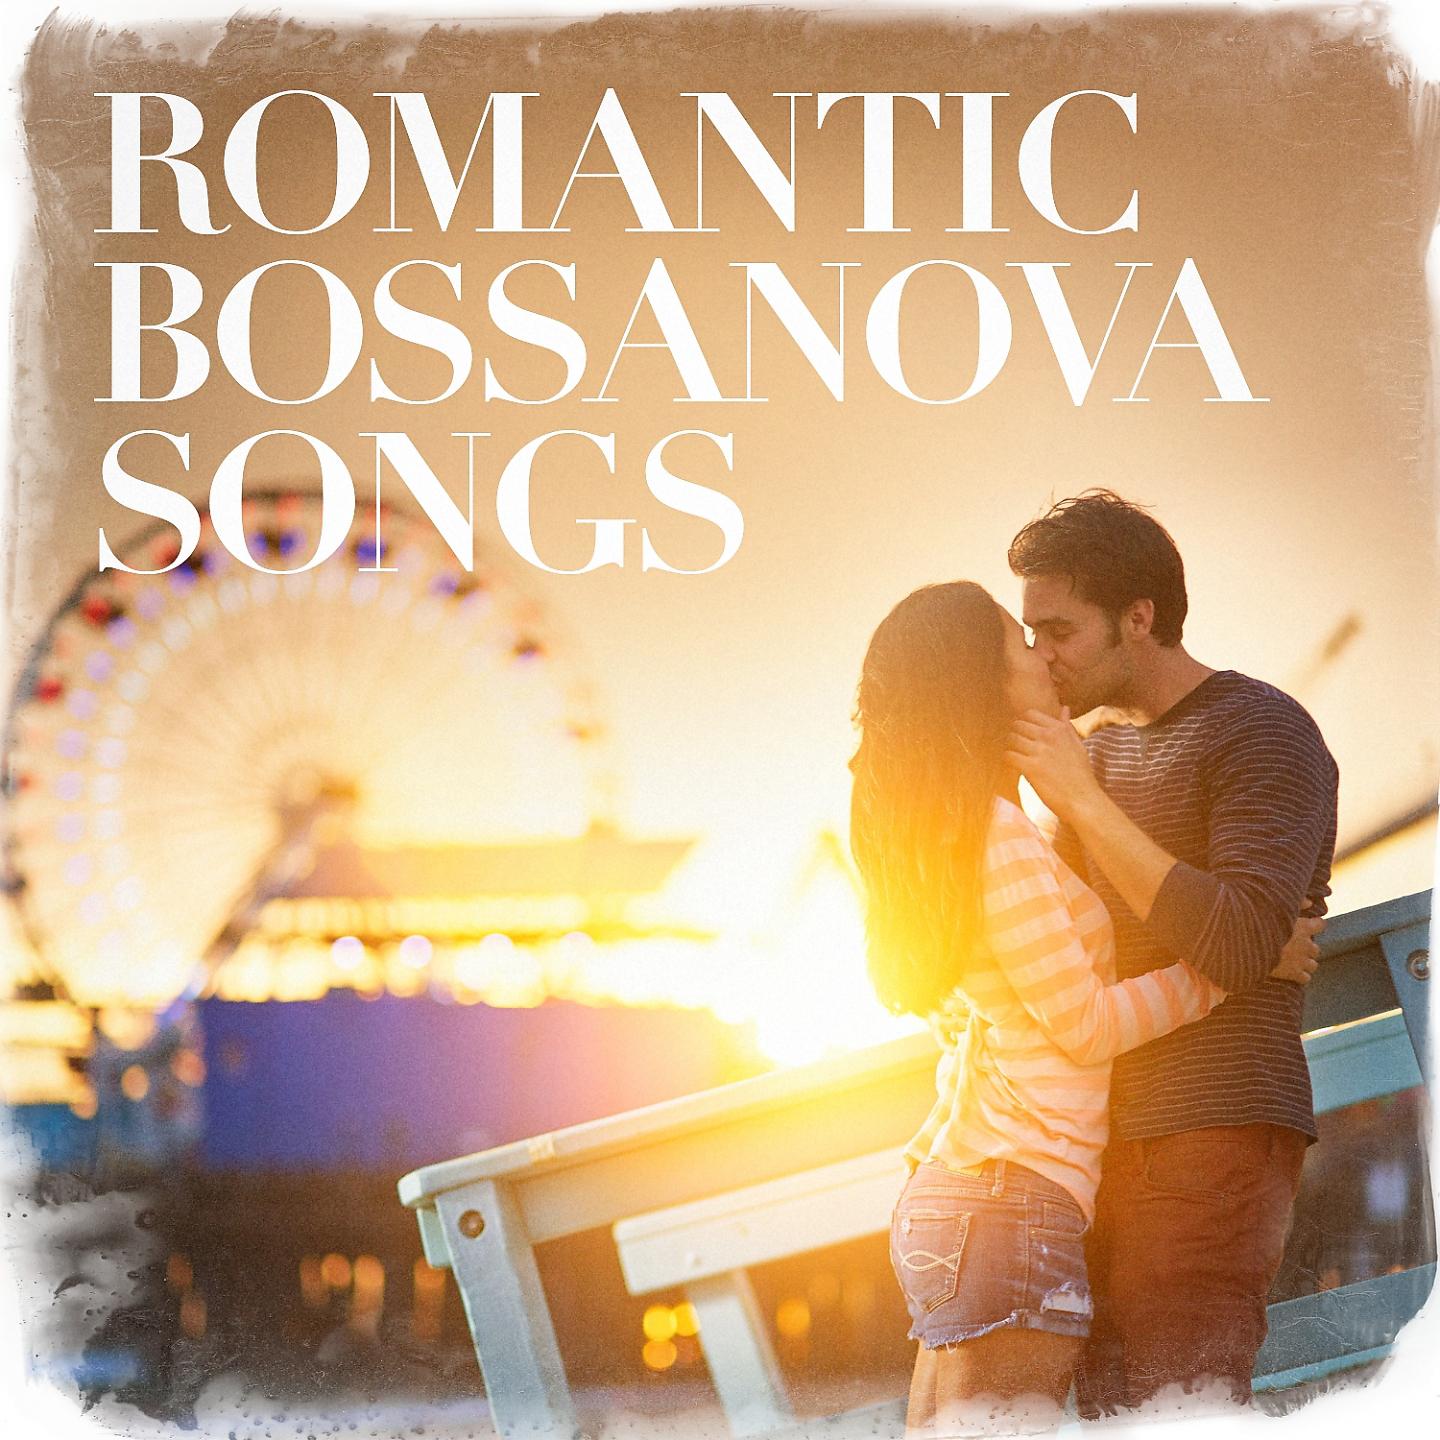 Альбом romance. Босанова. Романтика альбом. Романтично uglystephan альбом. Босанова музыка Бразилия.